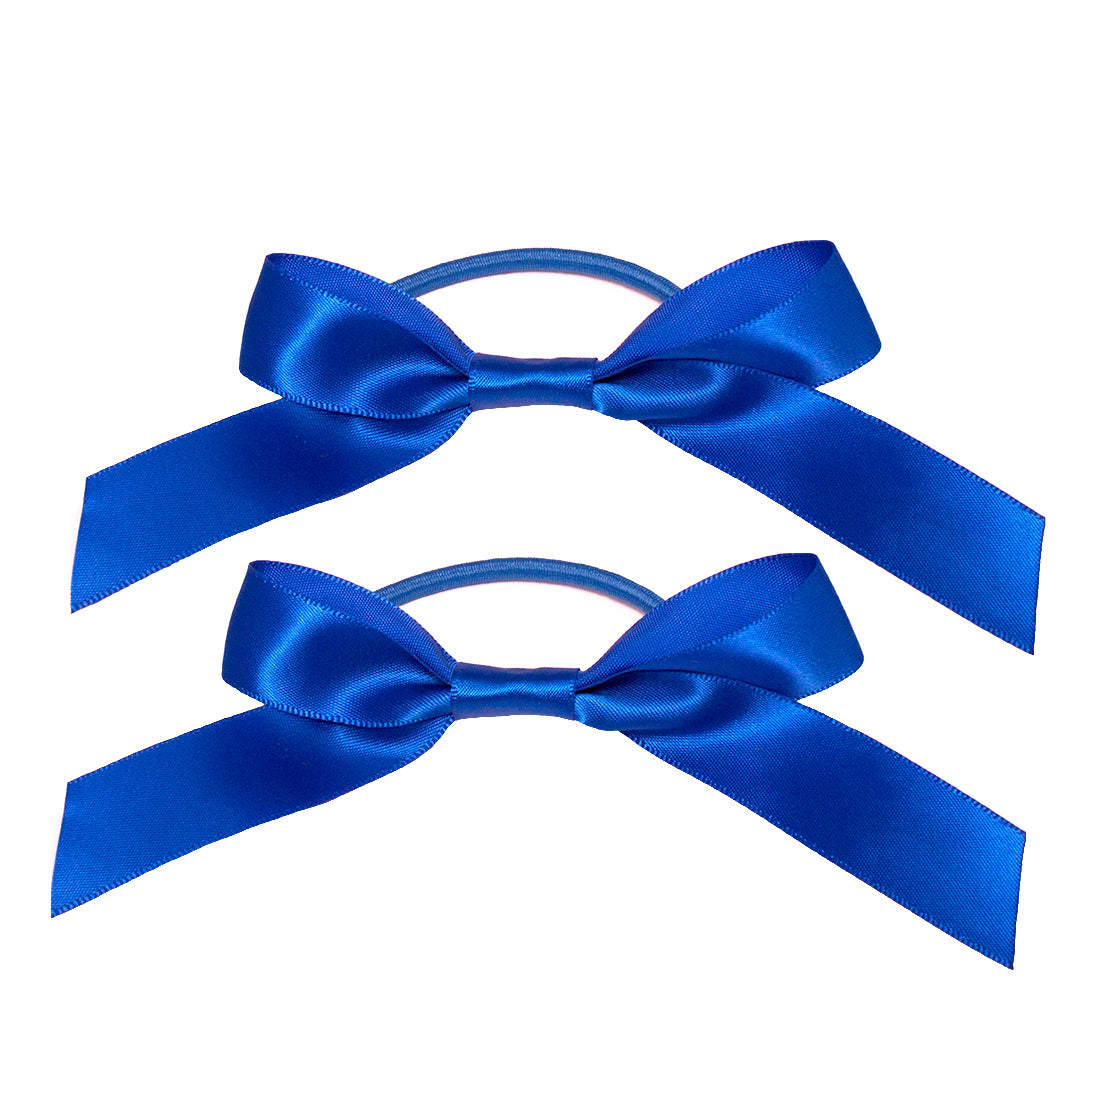 Mia® Spirit Satin Ribbon Bow Ponytailer Set - hair accessories - Navy blue color - designed by #MiaKaminski of Mia Beauty